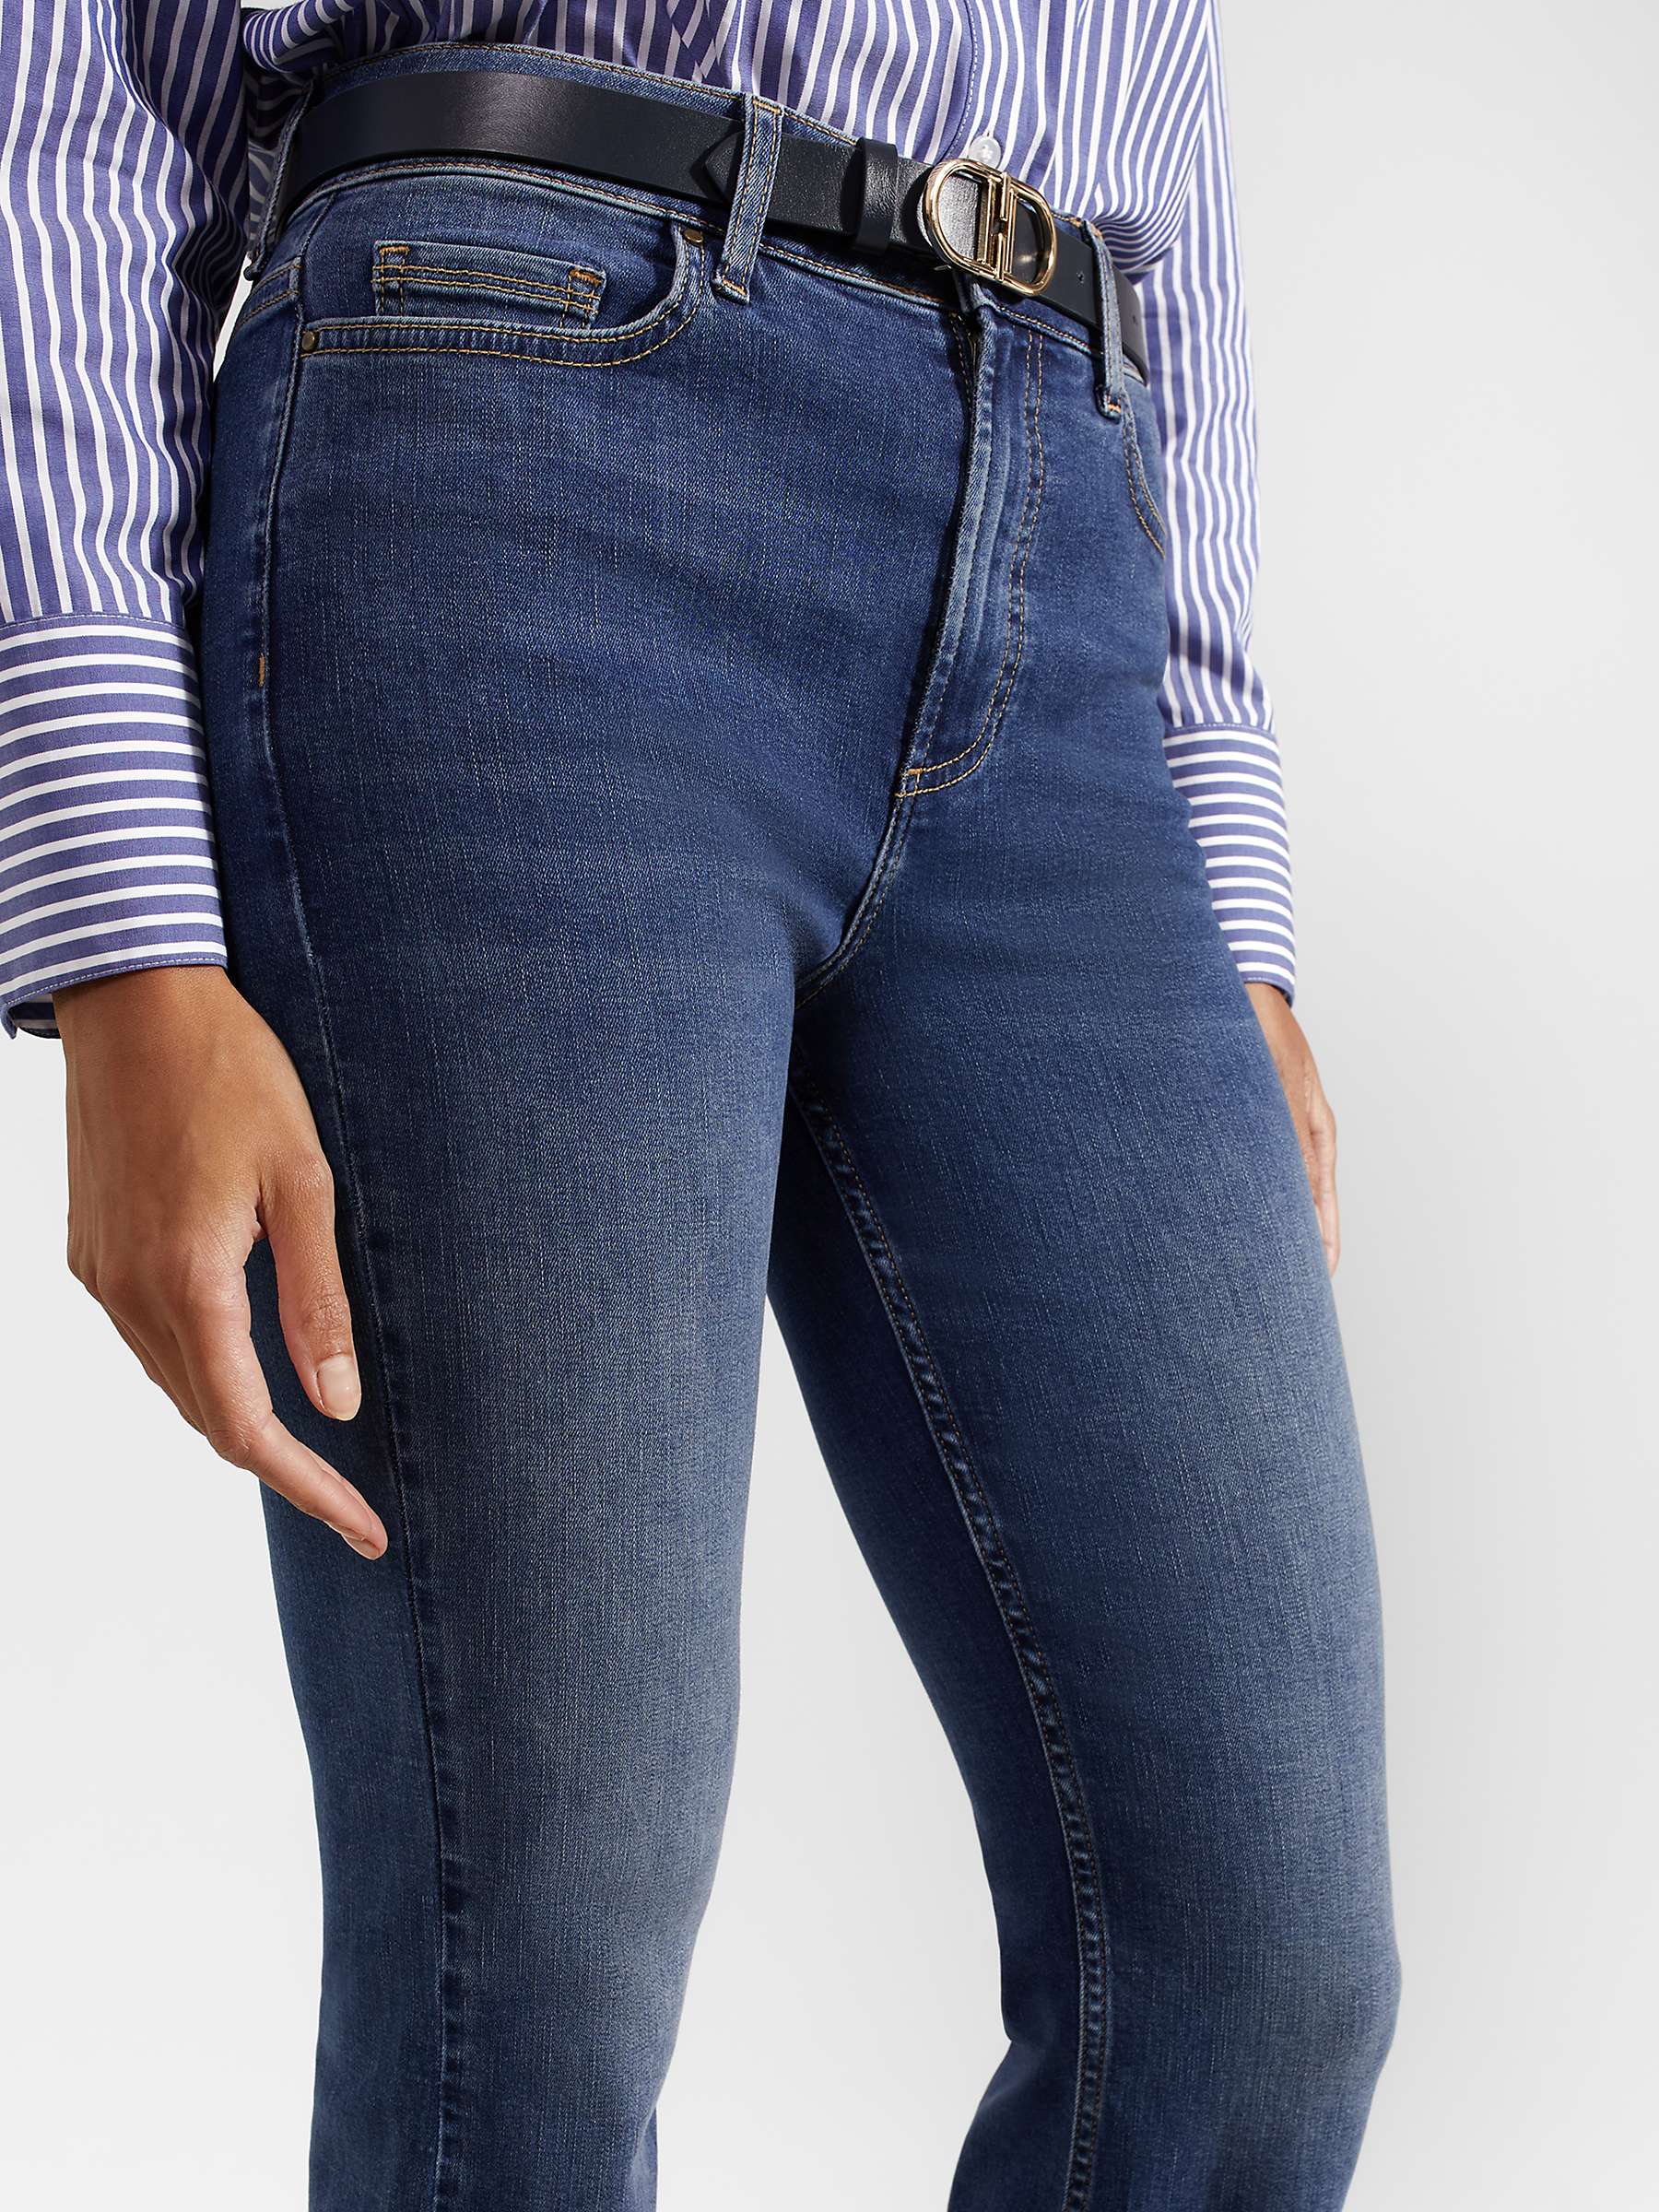 Buy Hobbs Niomi Cropped Kick Flare Jeans, Mid Wash Online at johnlewis.com